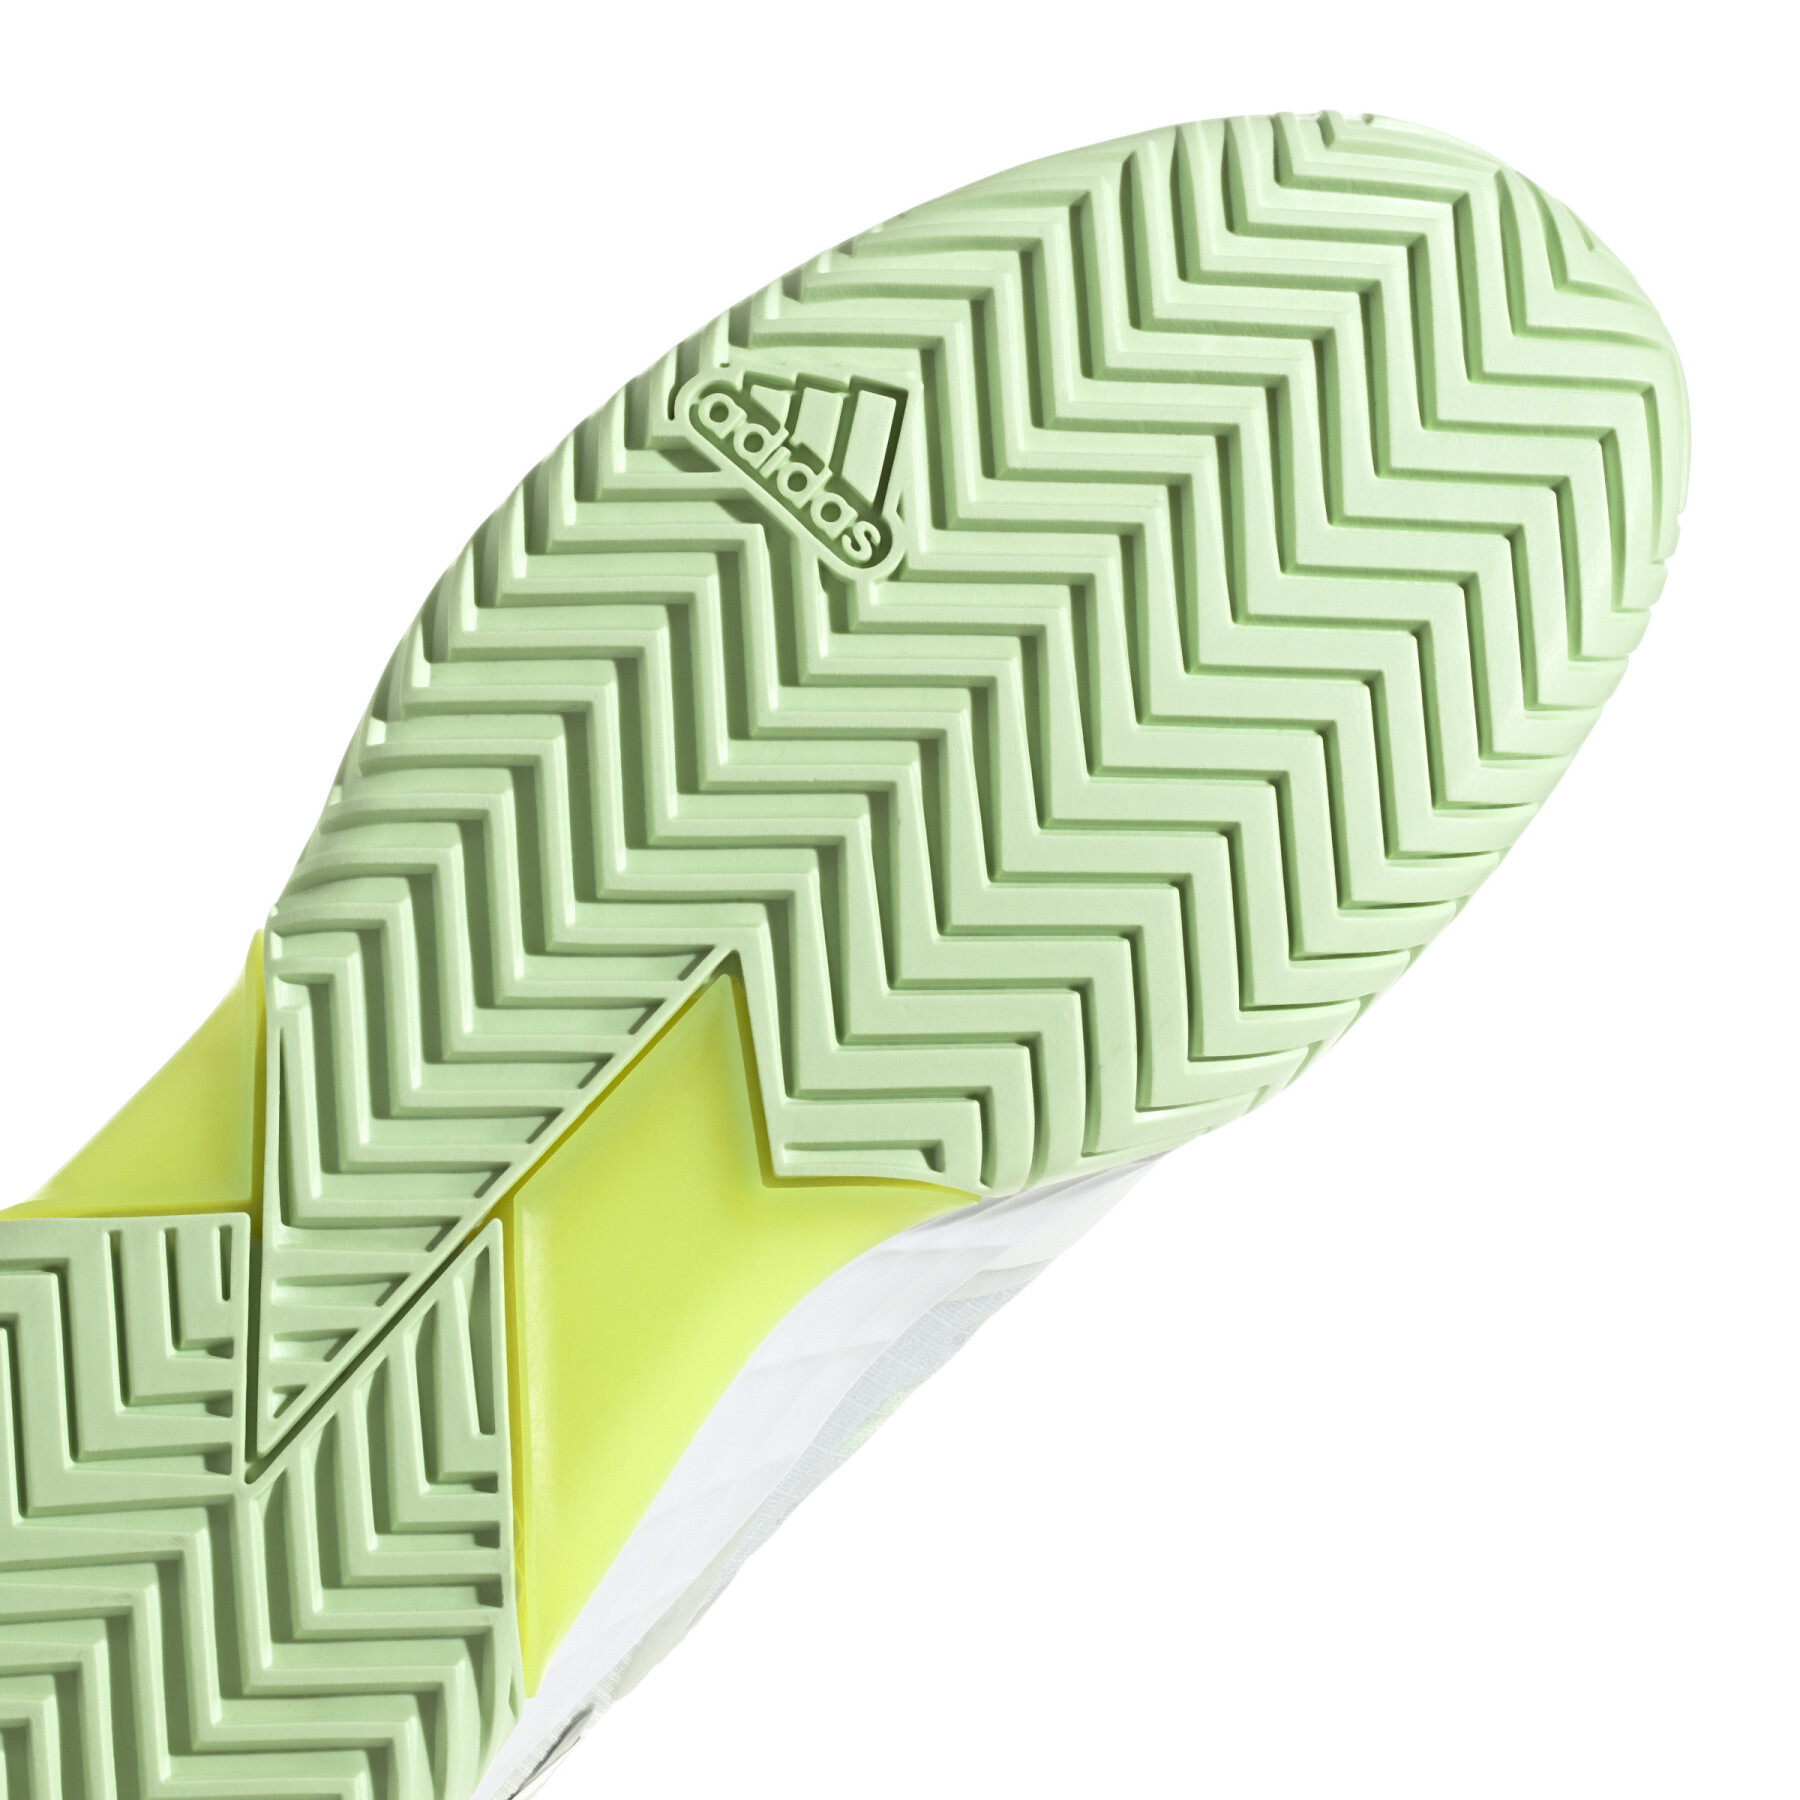 Scarpe da tennis adidas Adizero Ubersonic 4.1